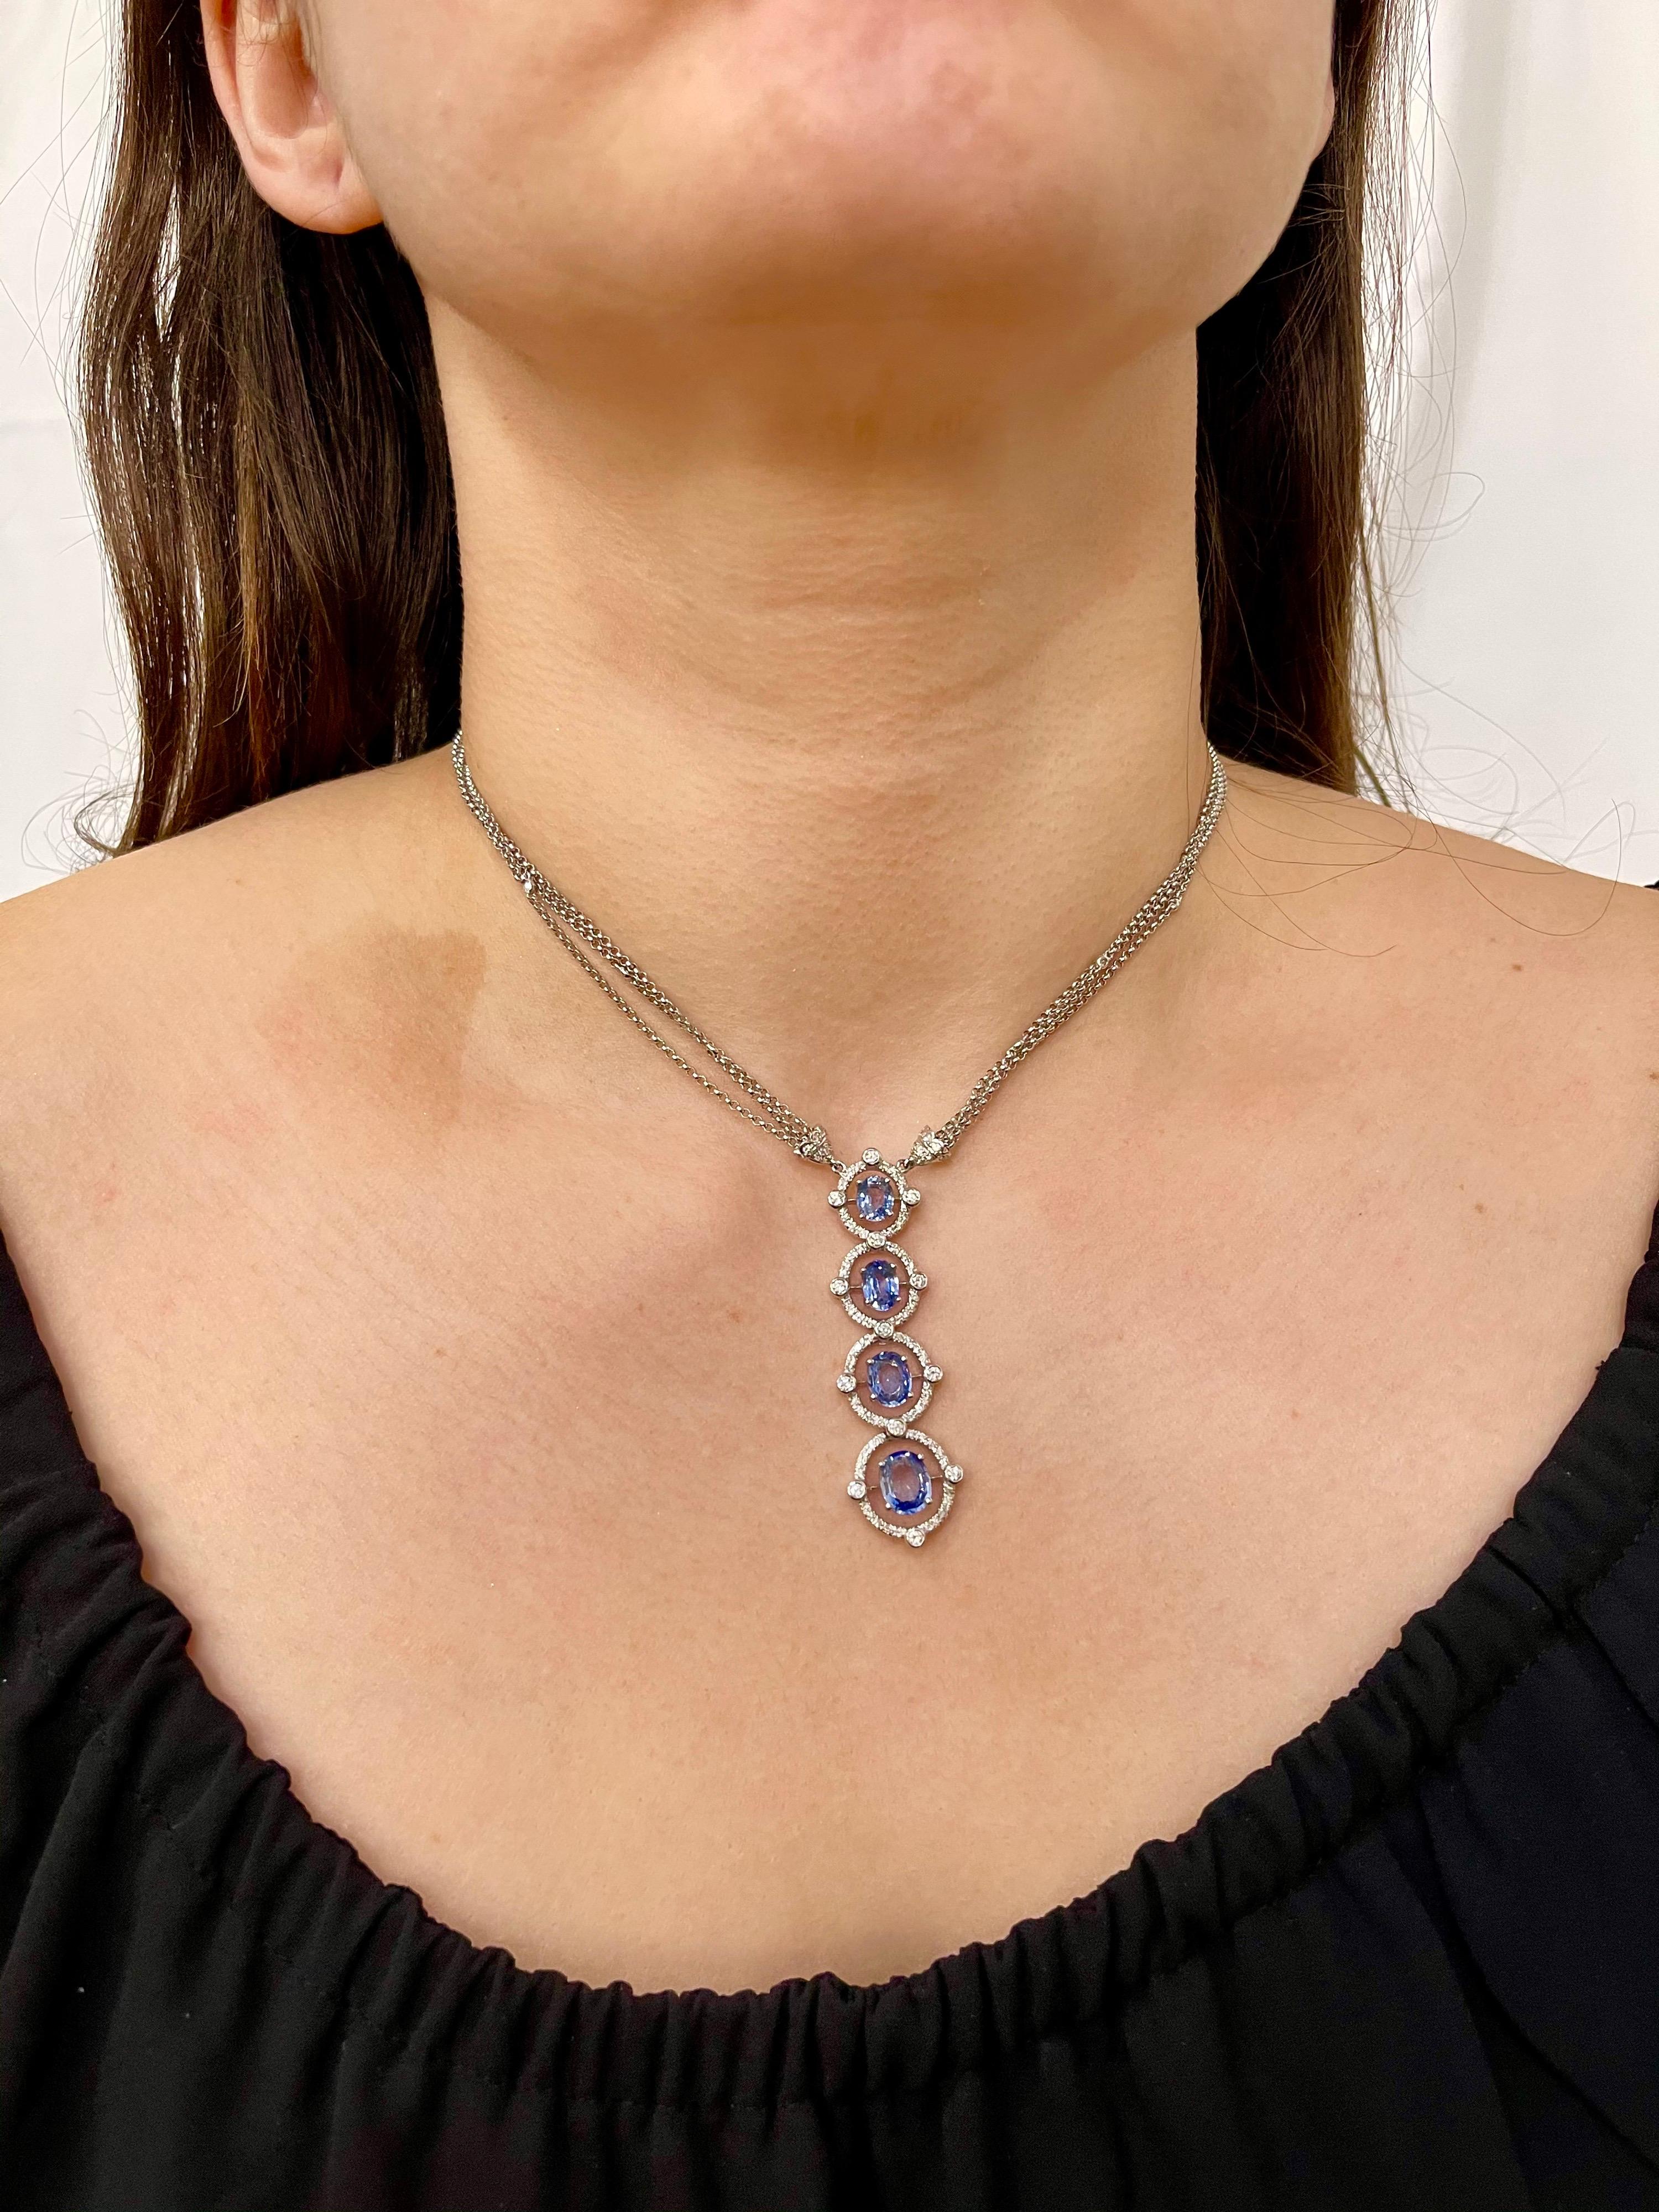 7 Carat Sapphire and Diamond Pendant or Necklace 18 Karat Gold Multi Chain 6